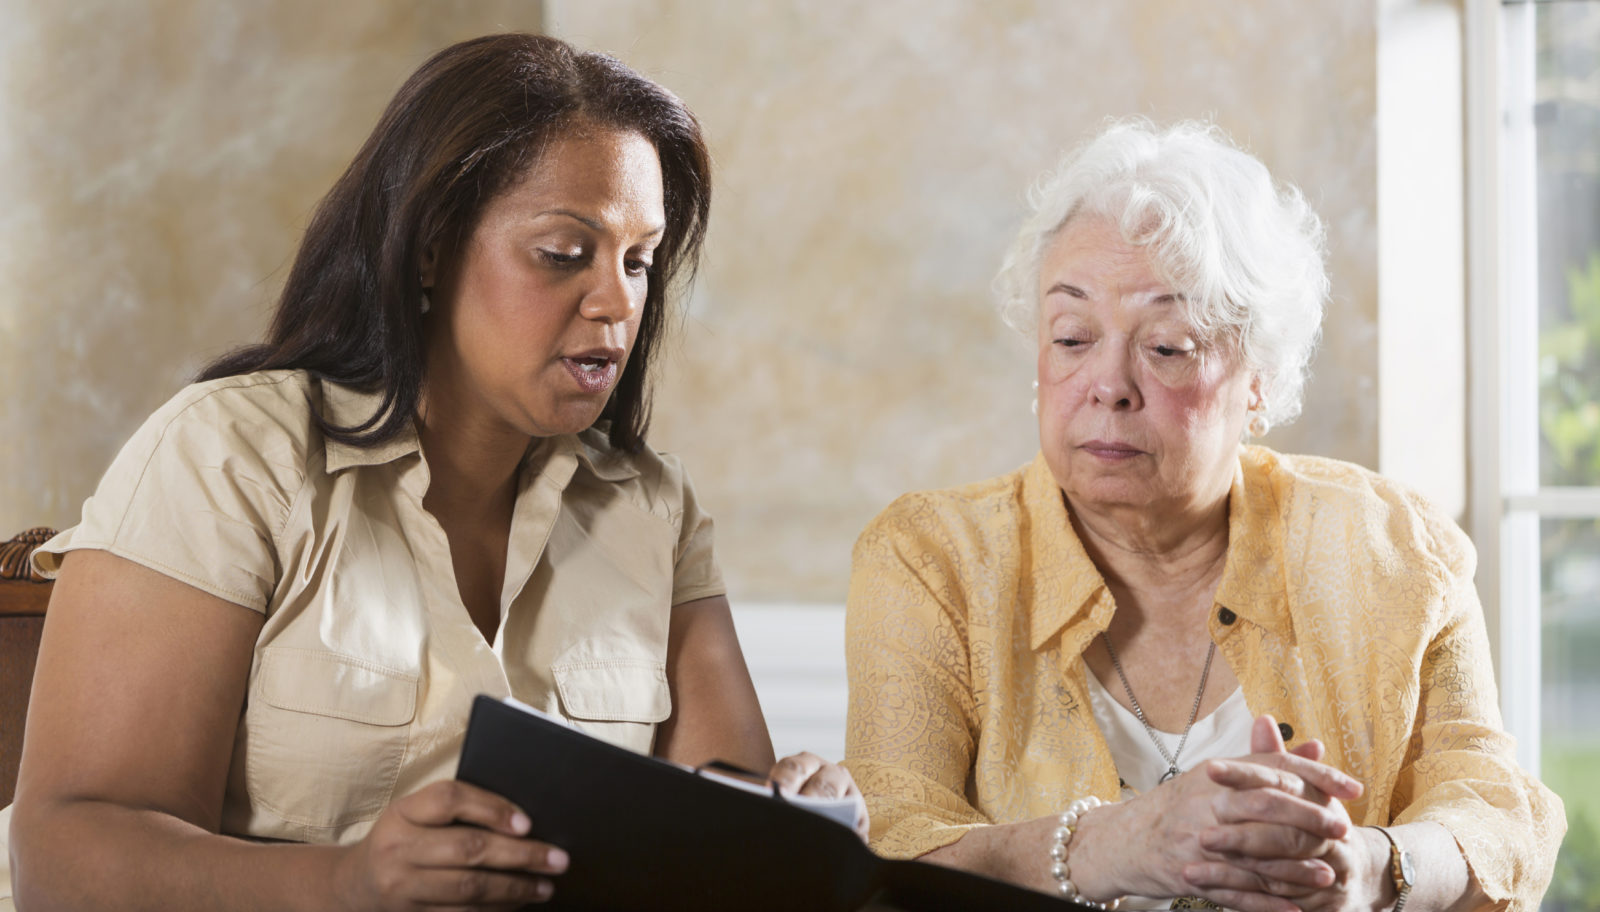 Mature Hispanic woman (50s) advising senior Hispanic woman (70s).